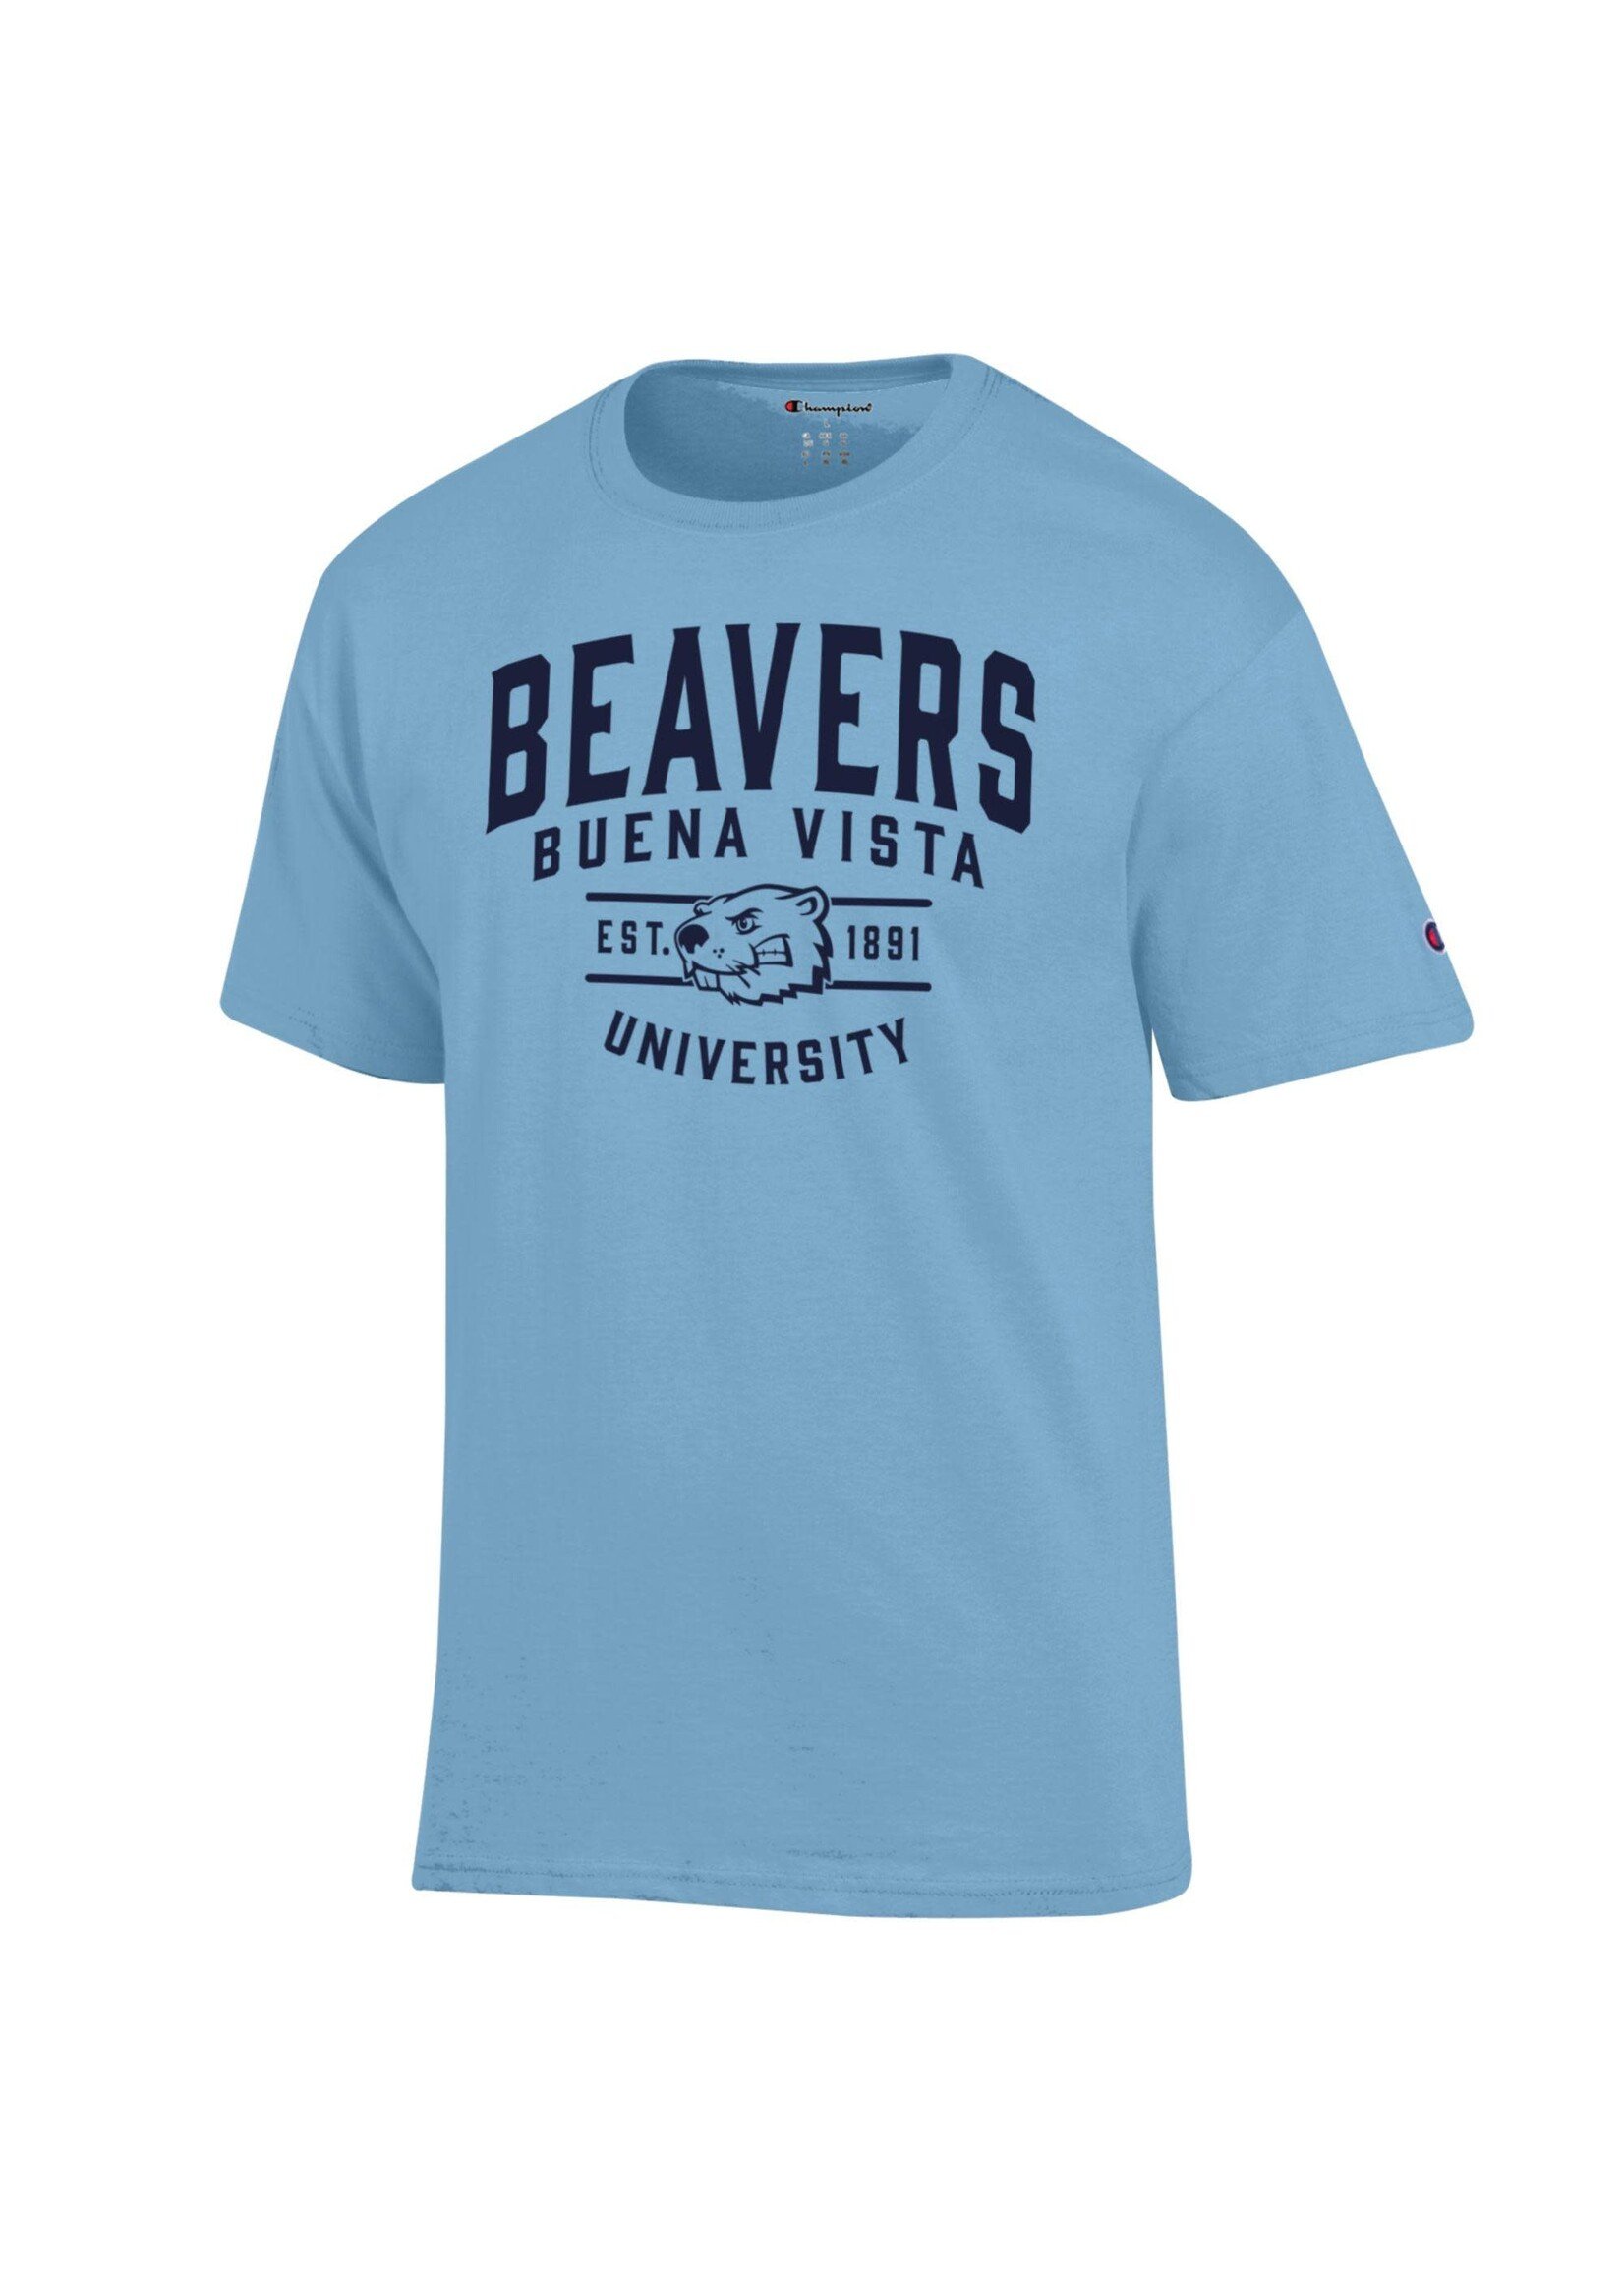 Champion Basic T shirt Beavers Buena Vista EST